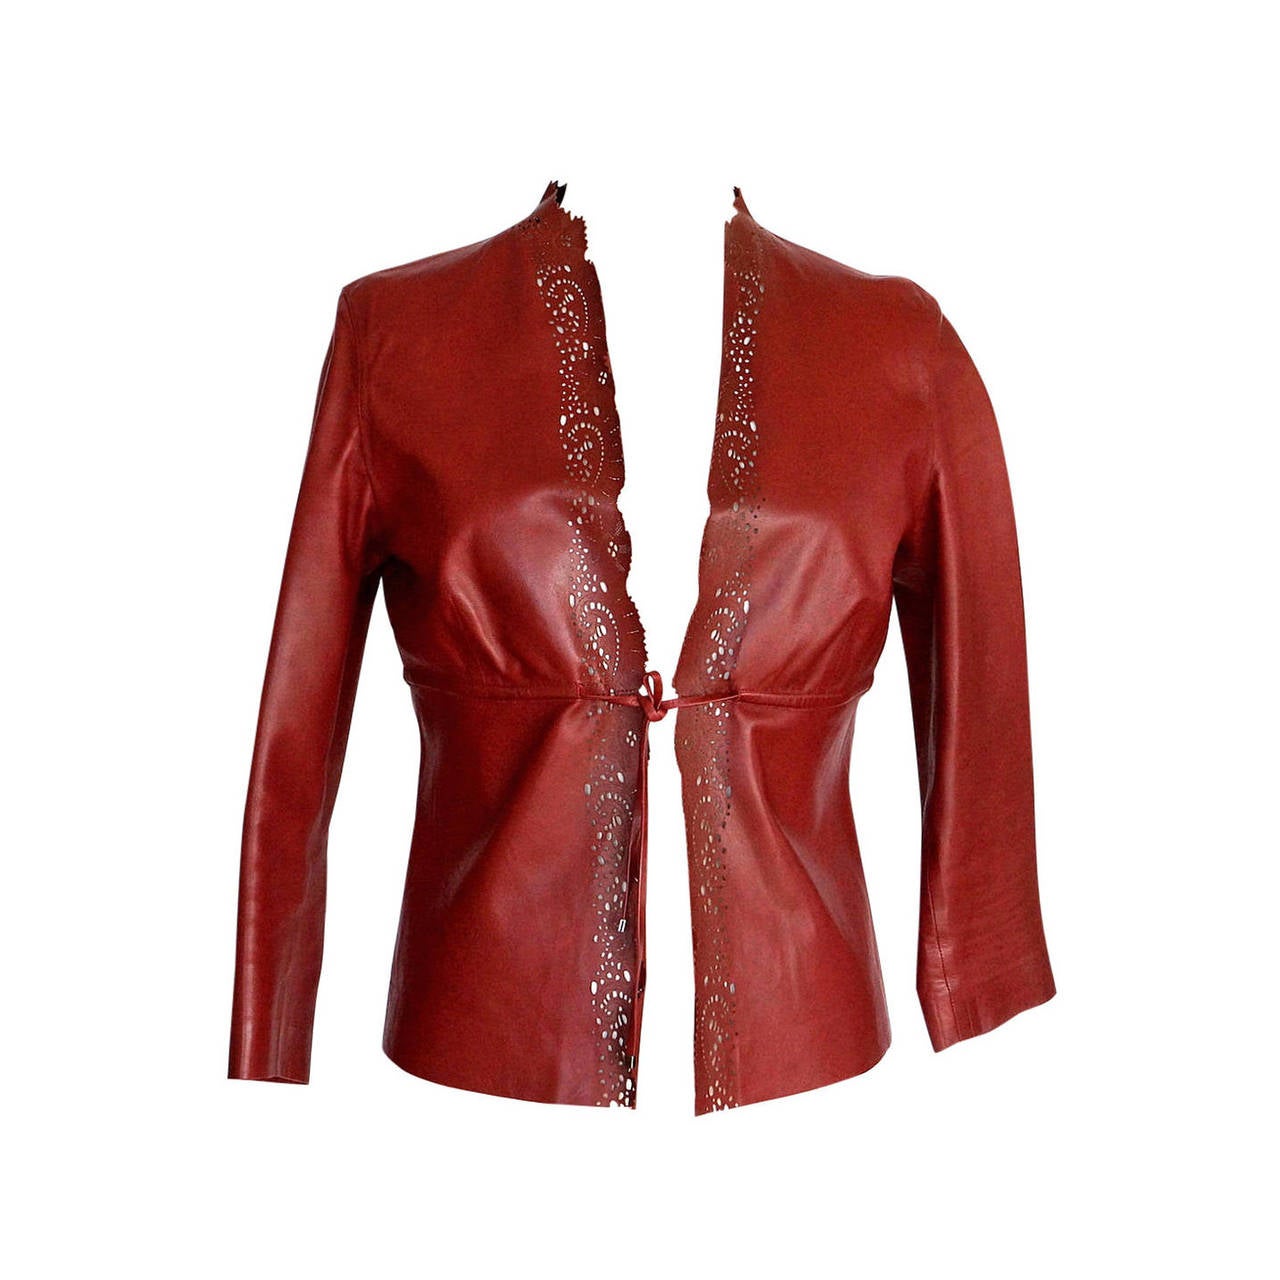 GUCCI jacket burgundy leather laser cut edges 3/4 sleeve 42 Tom Ford